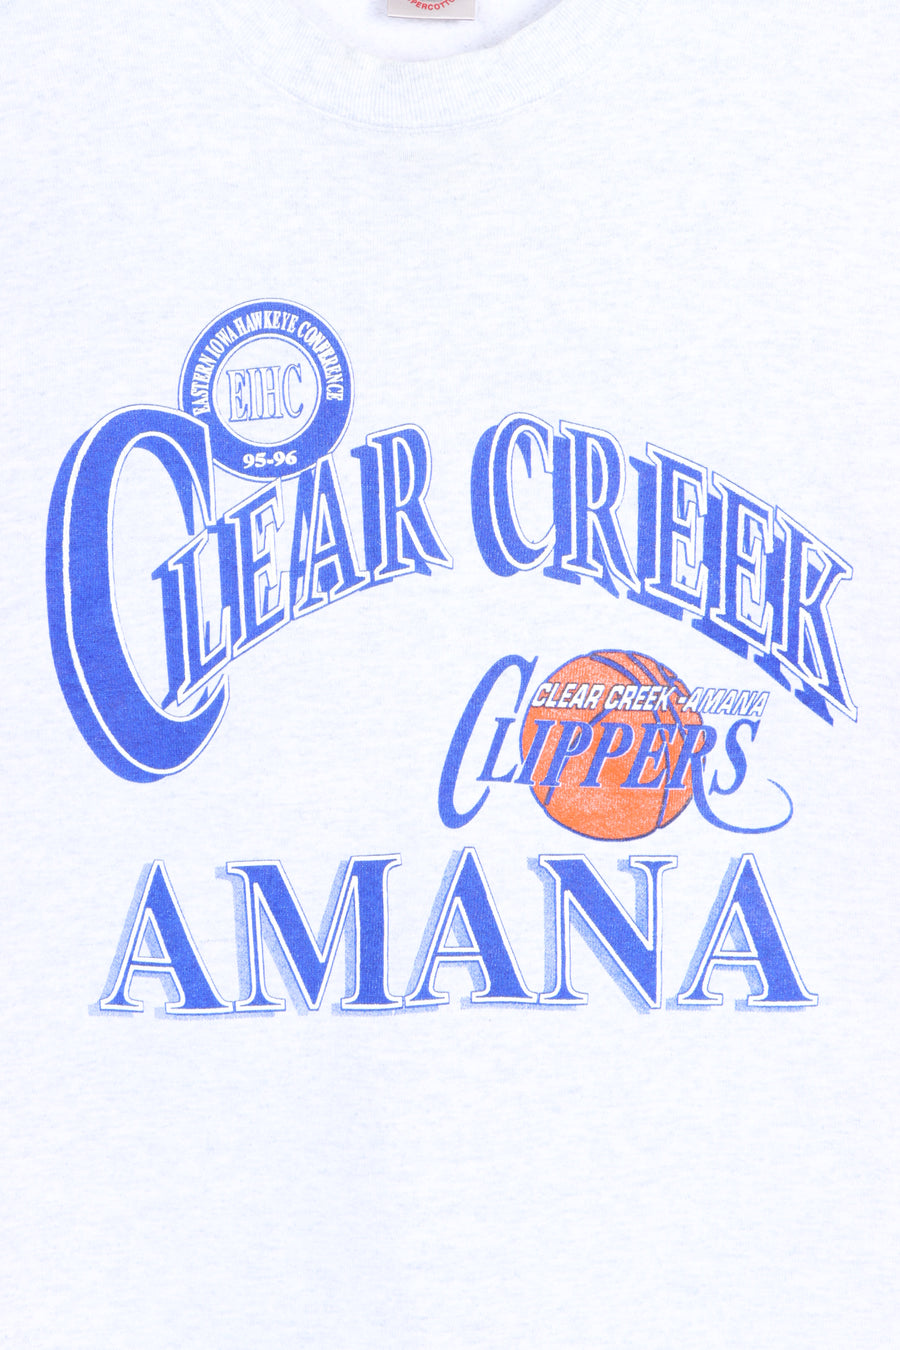 Clear Creek Amana Clippers 1995-1996 Basketball Sweatshirt (L)